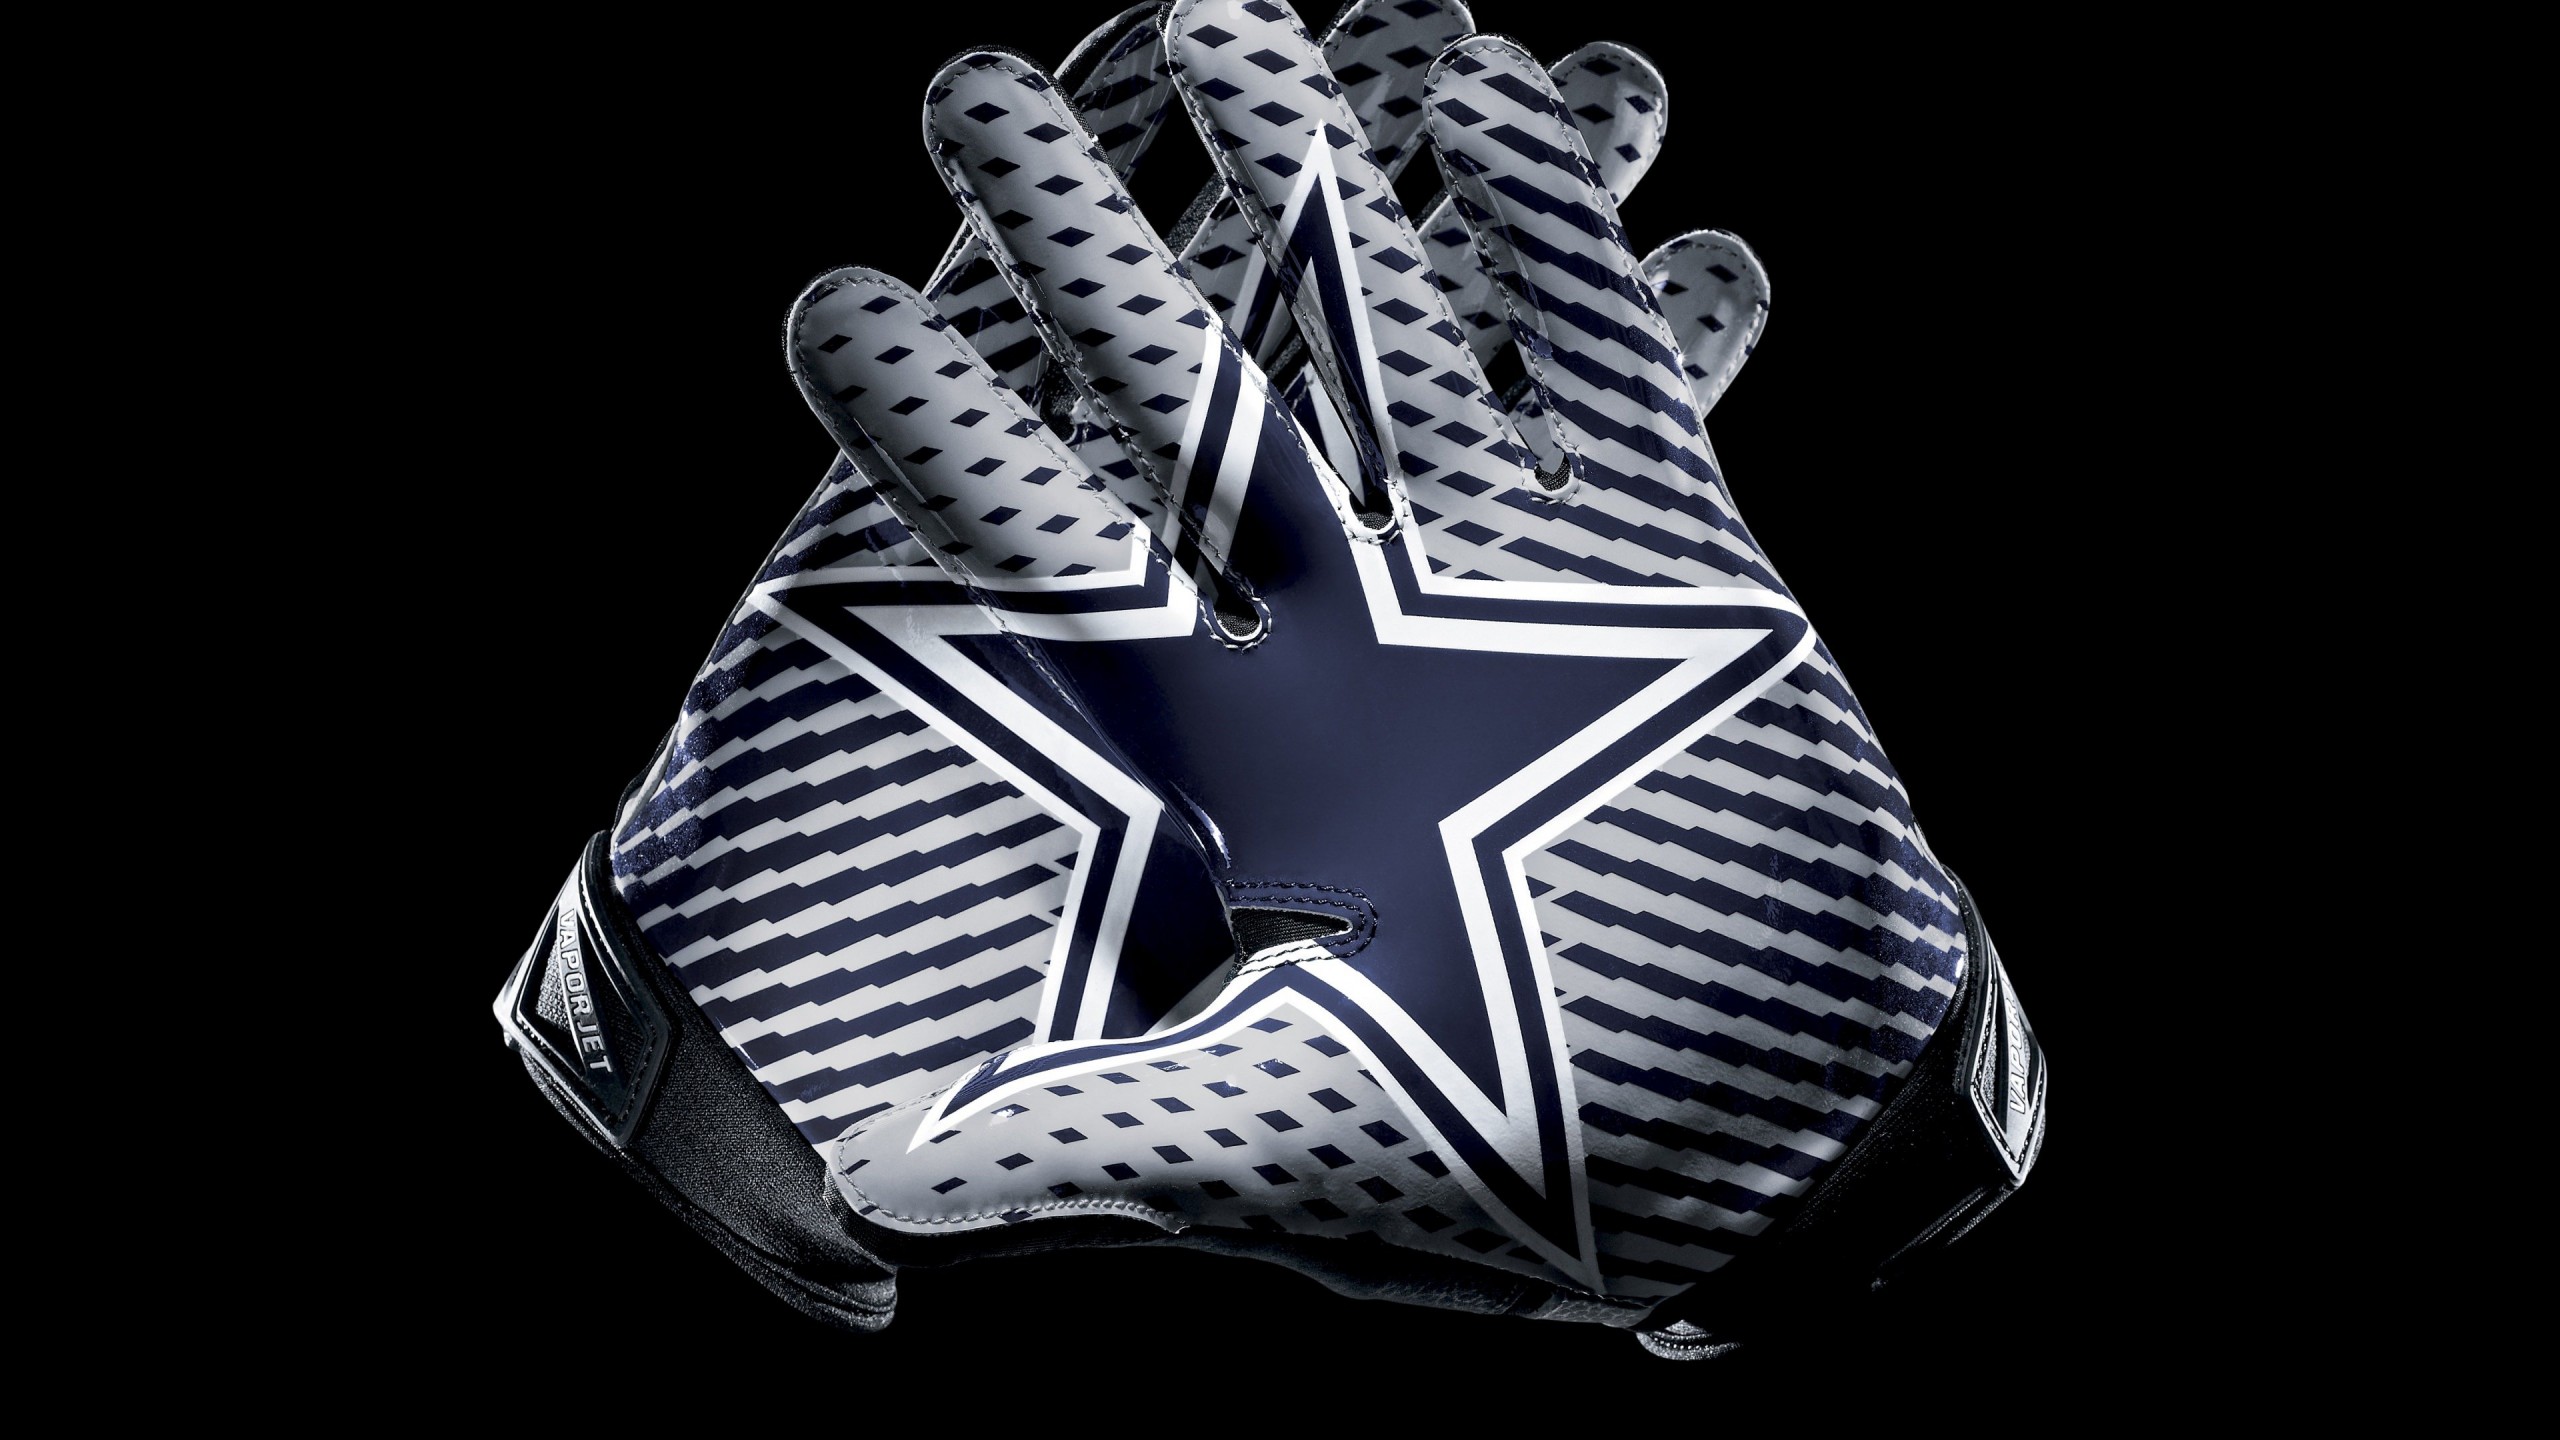 Dallas Cowboys Gloves Wallpaper for Desktop 2560x1440